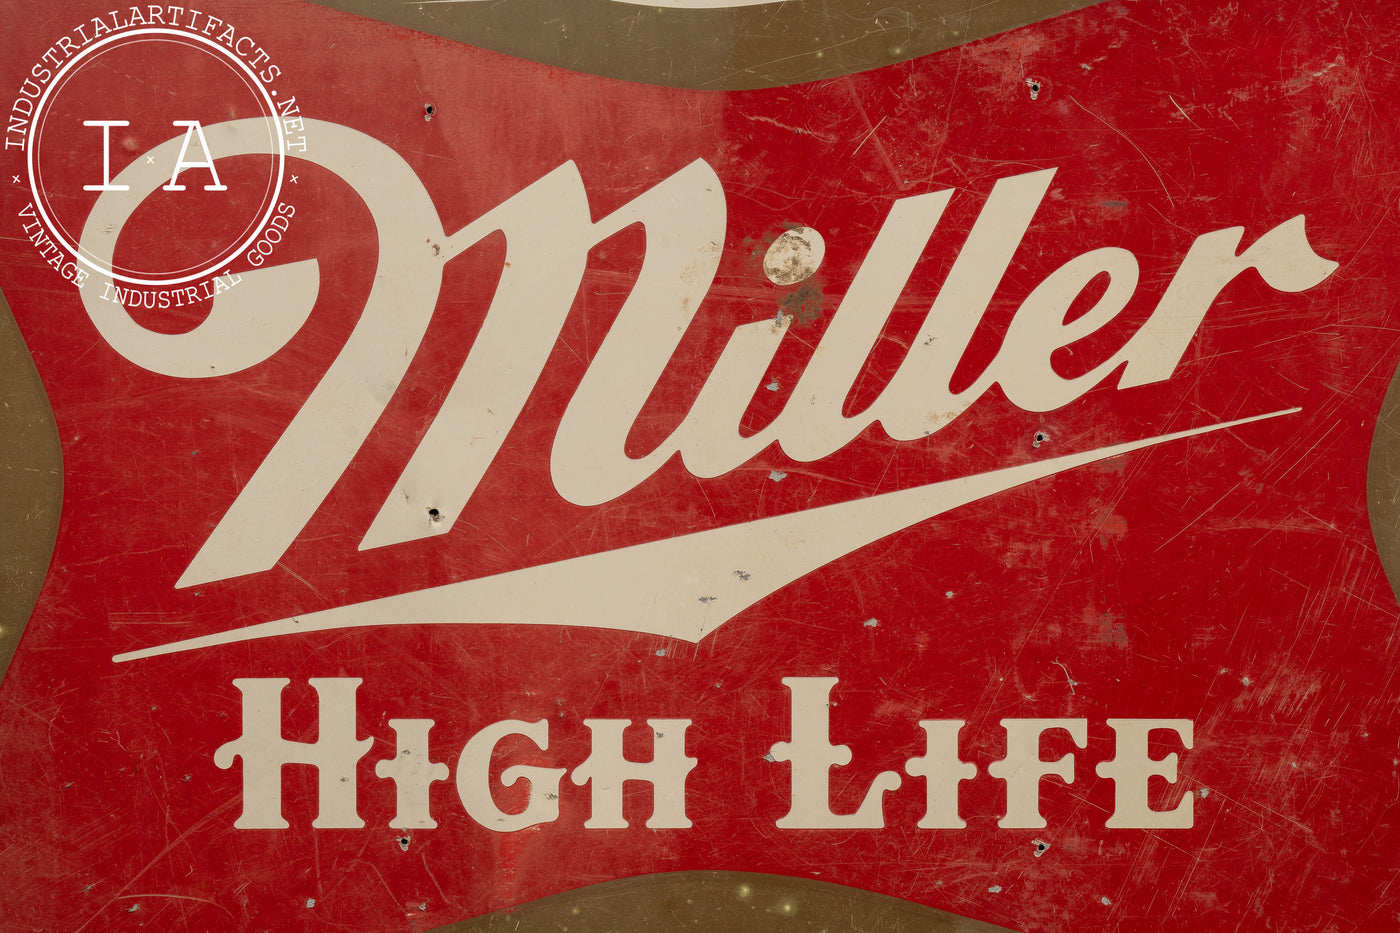 Large SST Miller High Life Advertising Sign